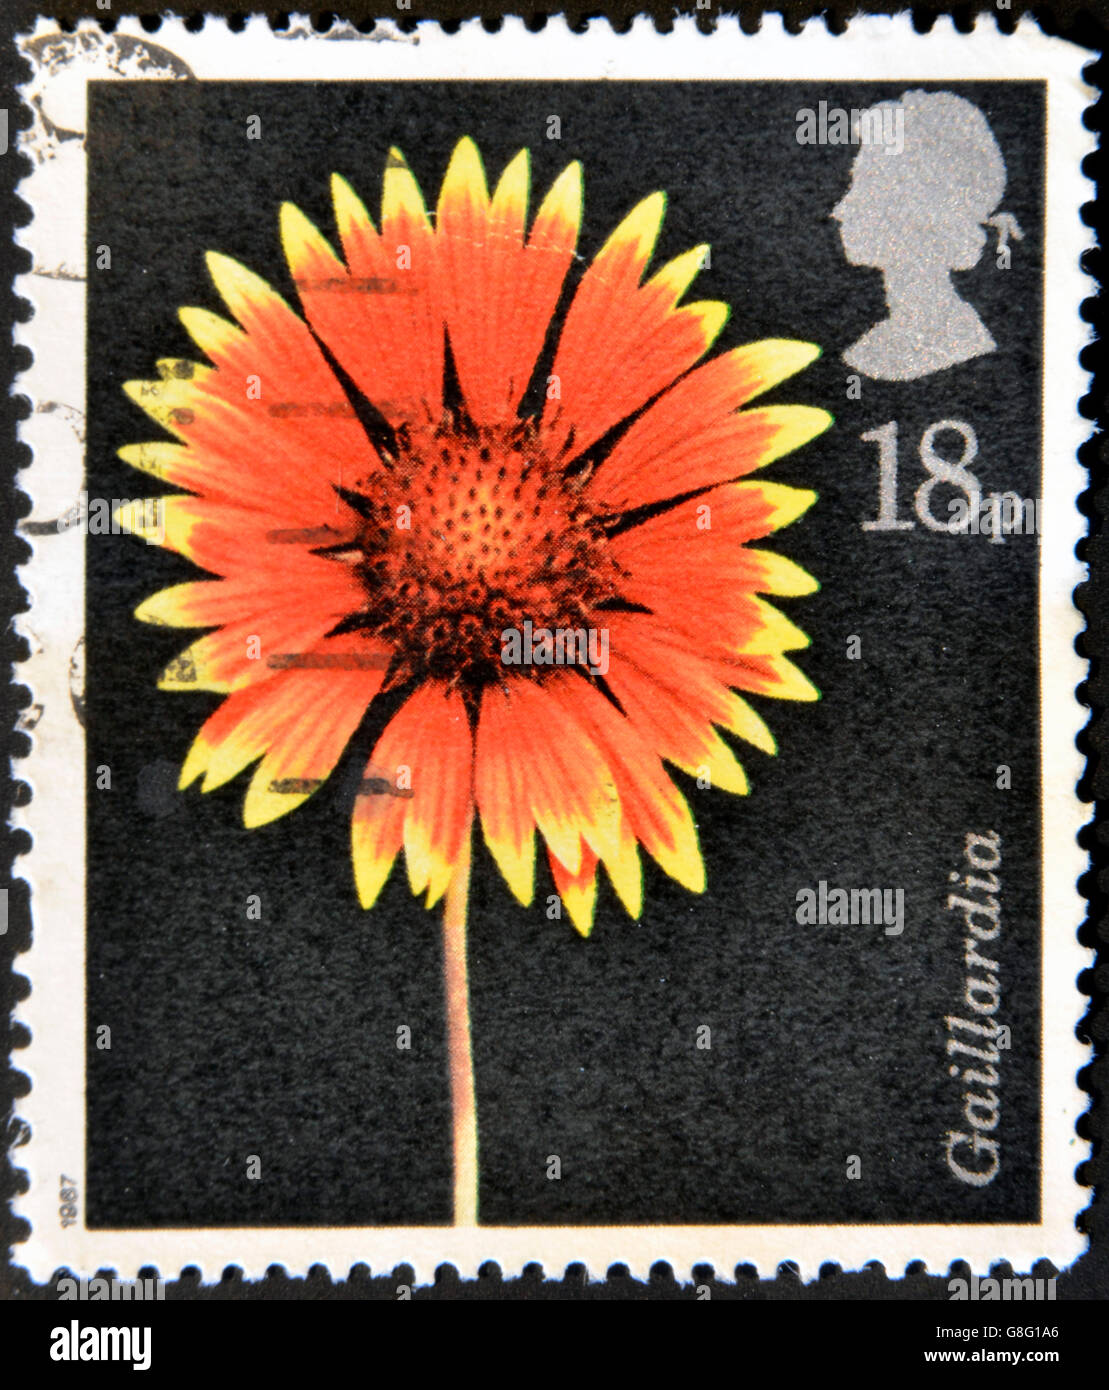 UNITED KINGDOM - CIRCA 1987: A stamp printed in Great Britain shows a Gaillardia, circa 1987 Stock Photo